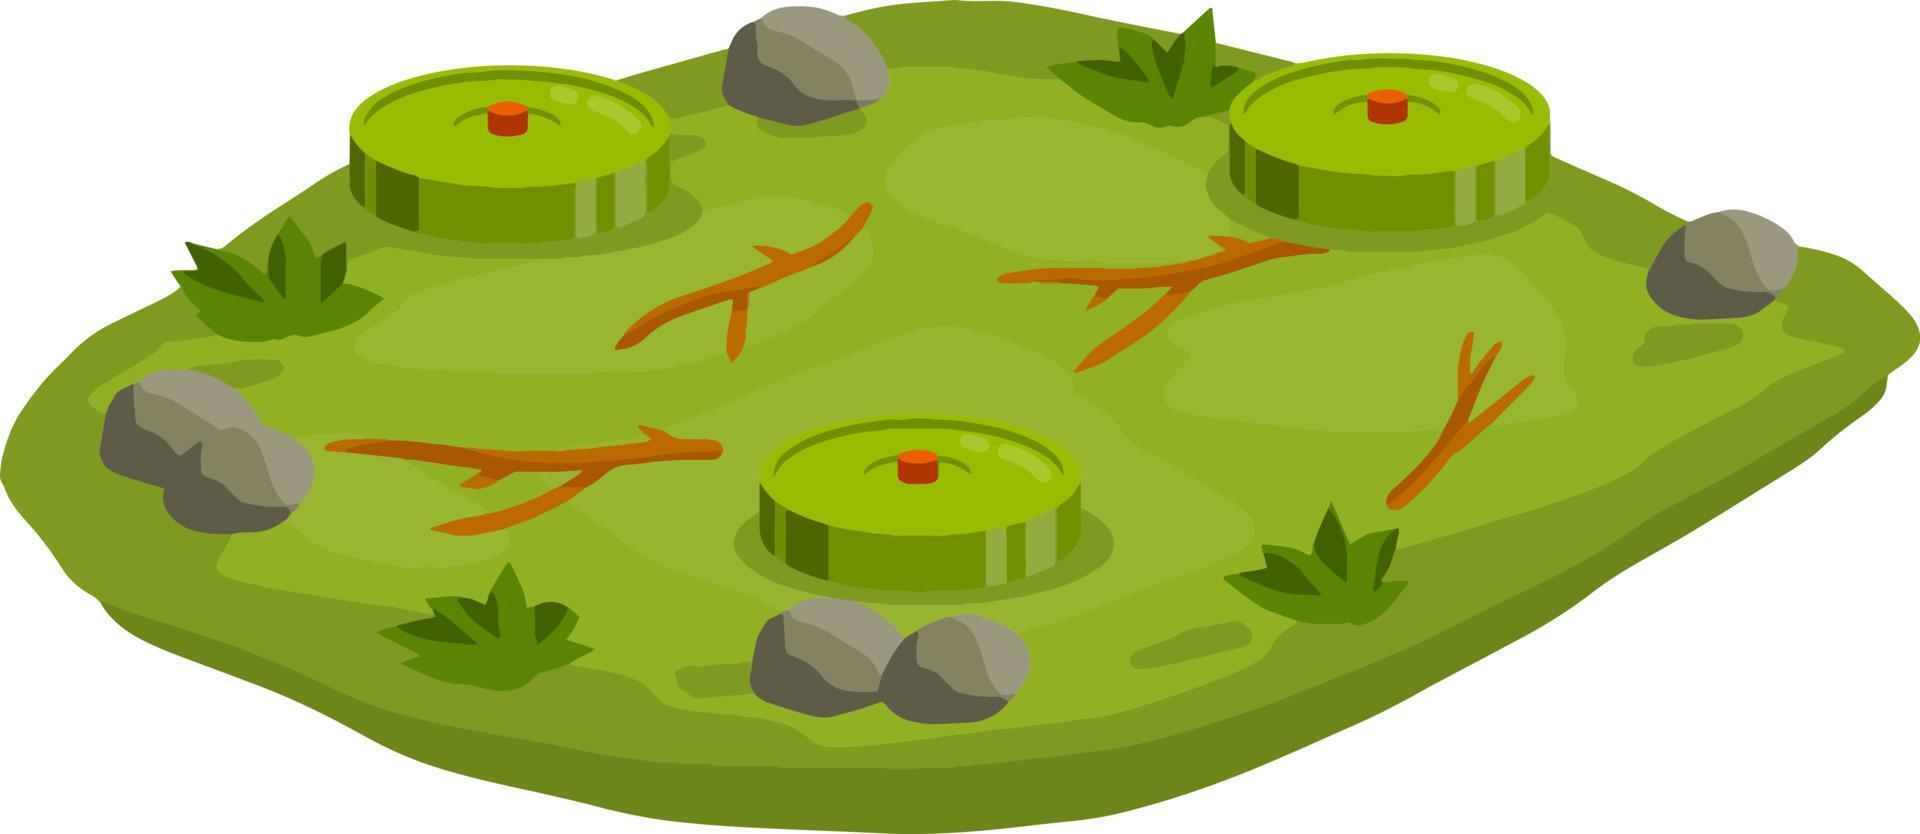 Rocks and grass. Modern warfare landscape. Explosive element of war. Cartoon flat illustration. Green lawn with bombs vector